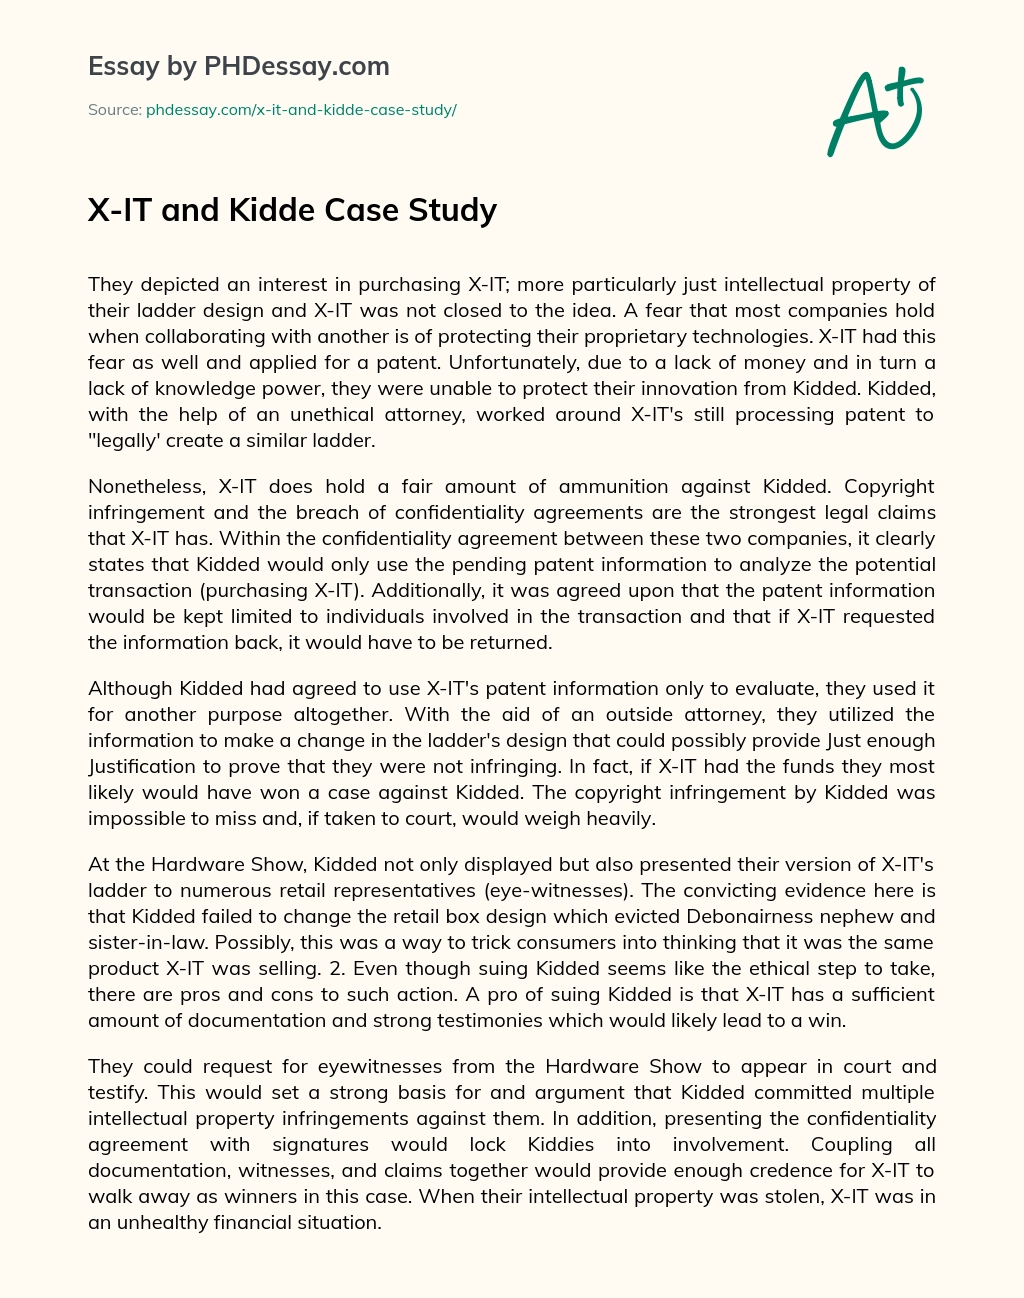 X-IT and Kidde Case Study essay